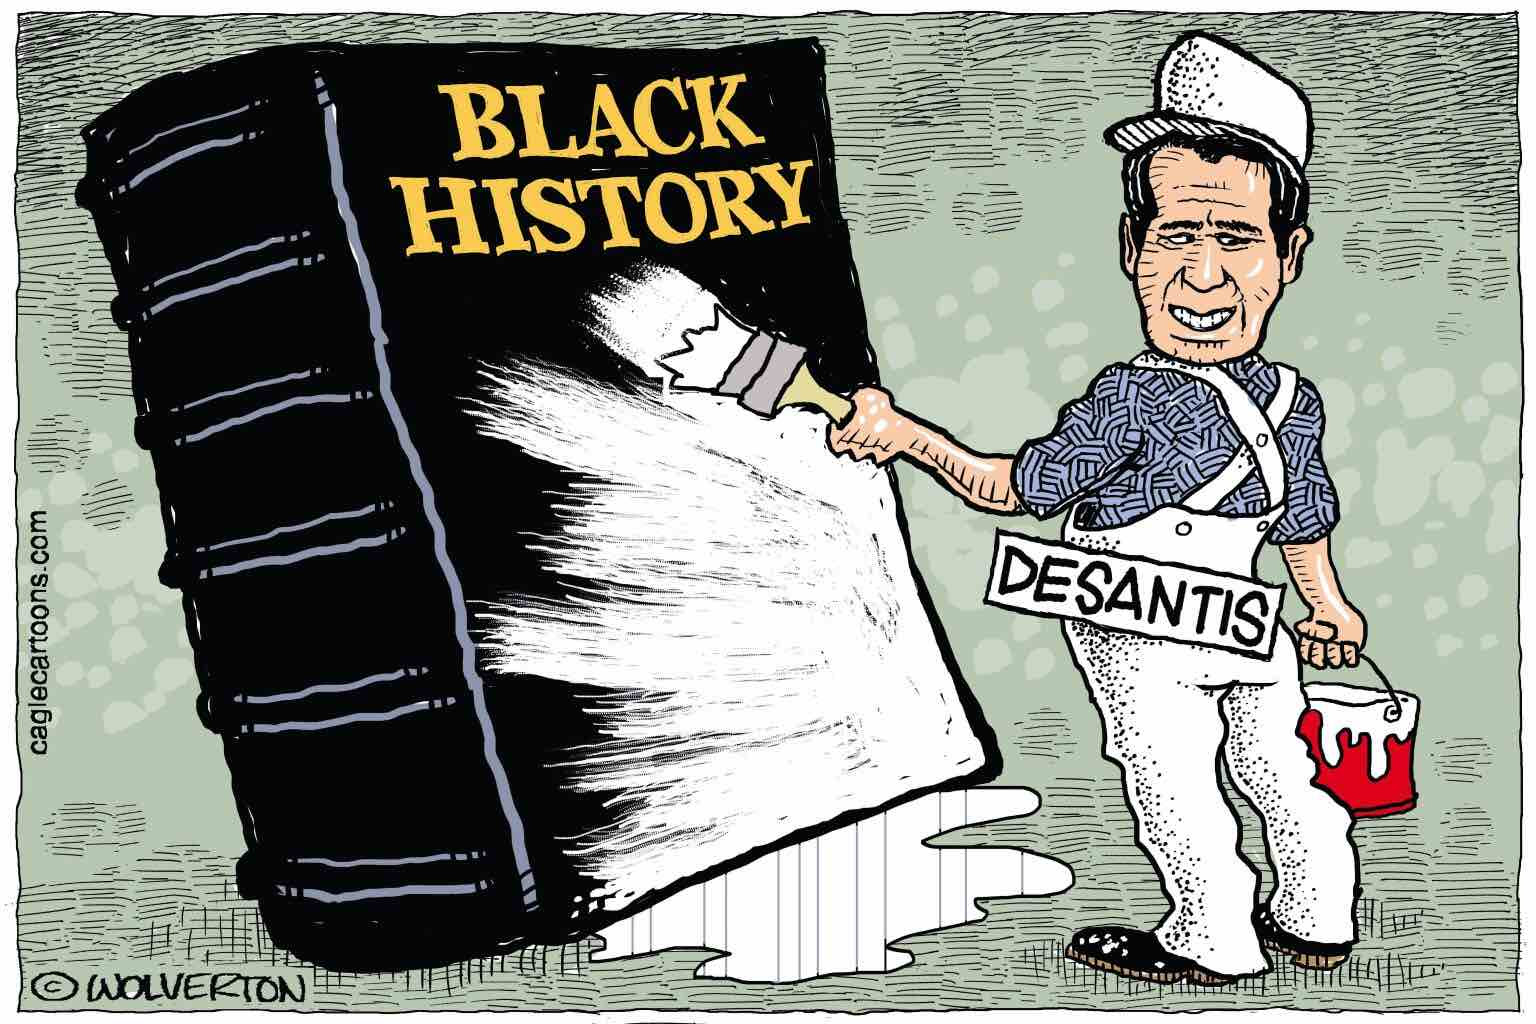 DeSantis tries to whitewash Black History